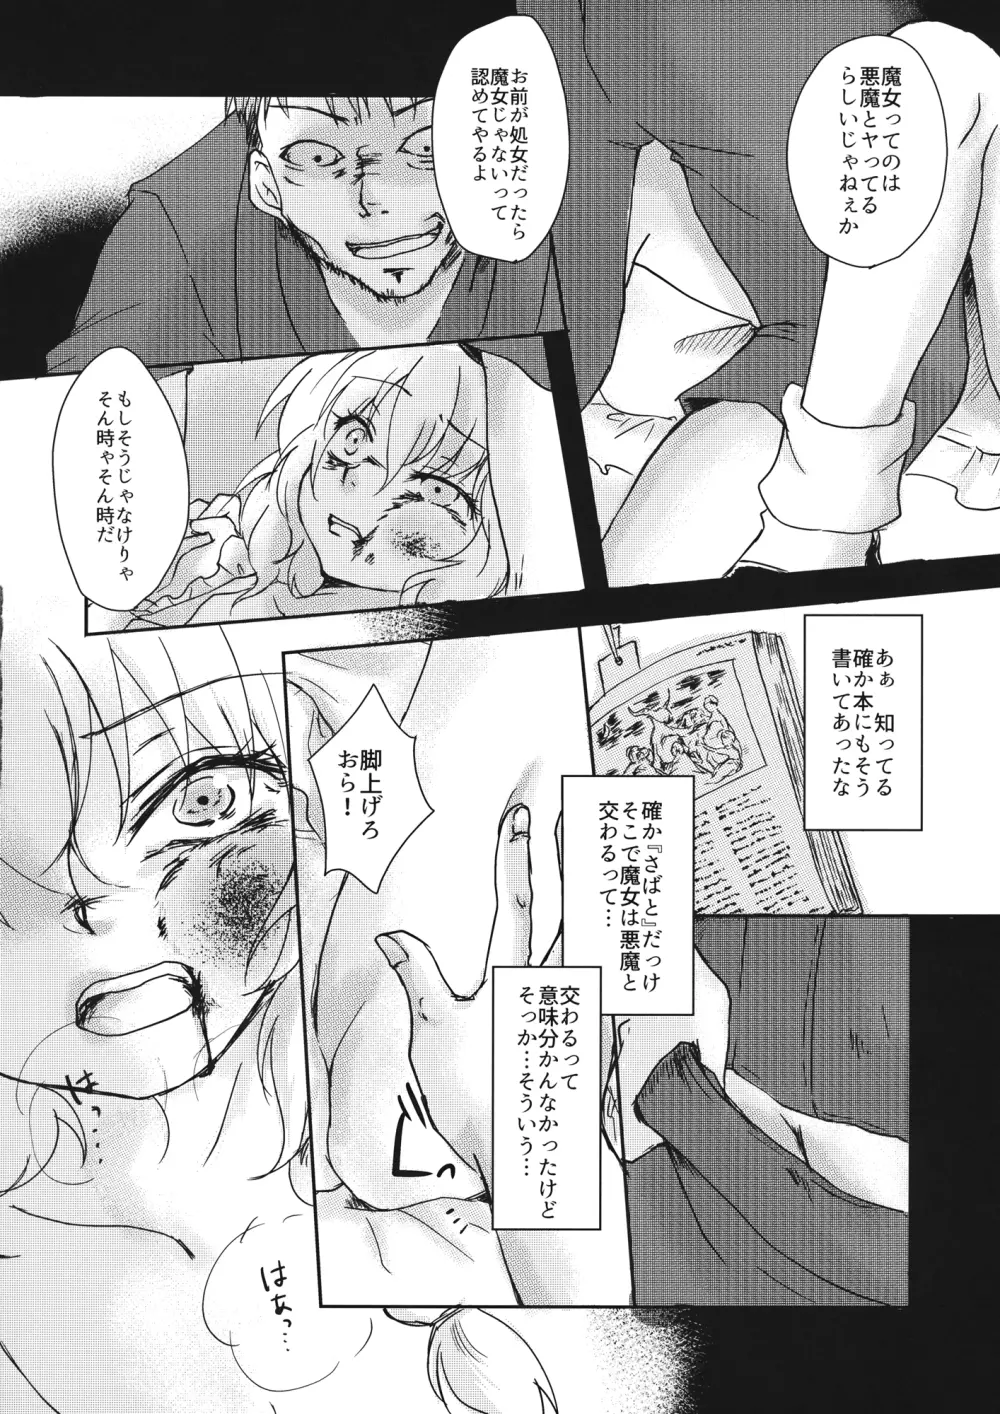 【embryo】 - page23